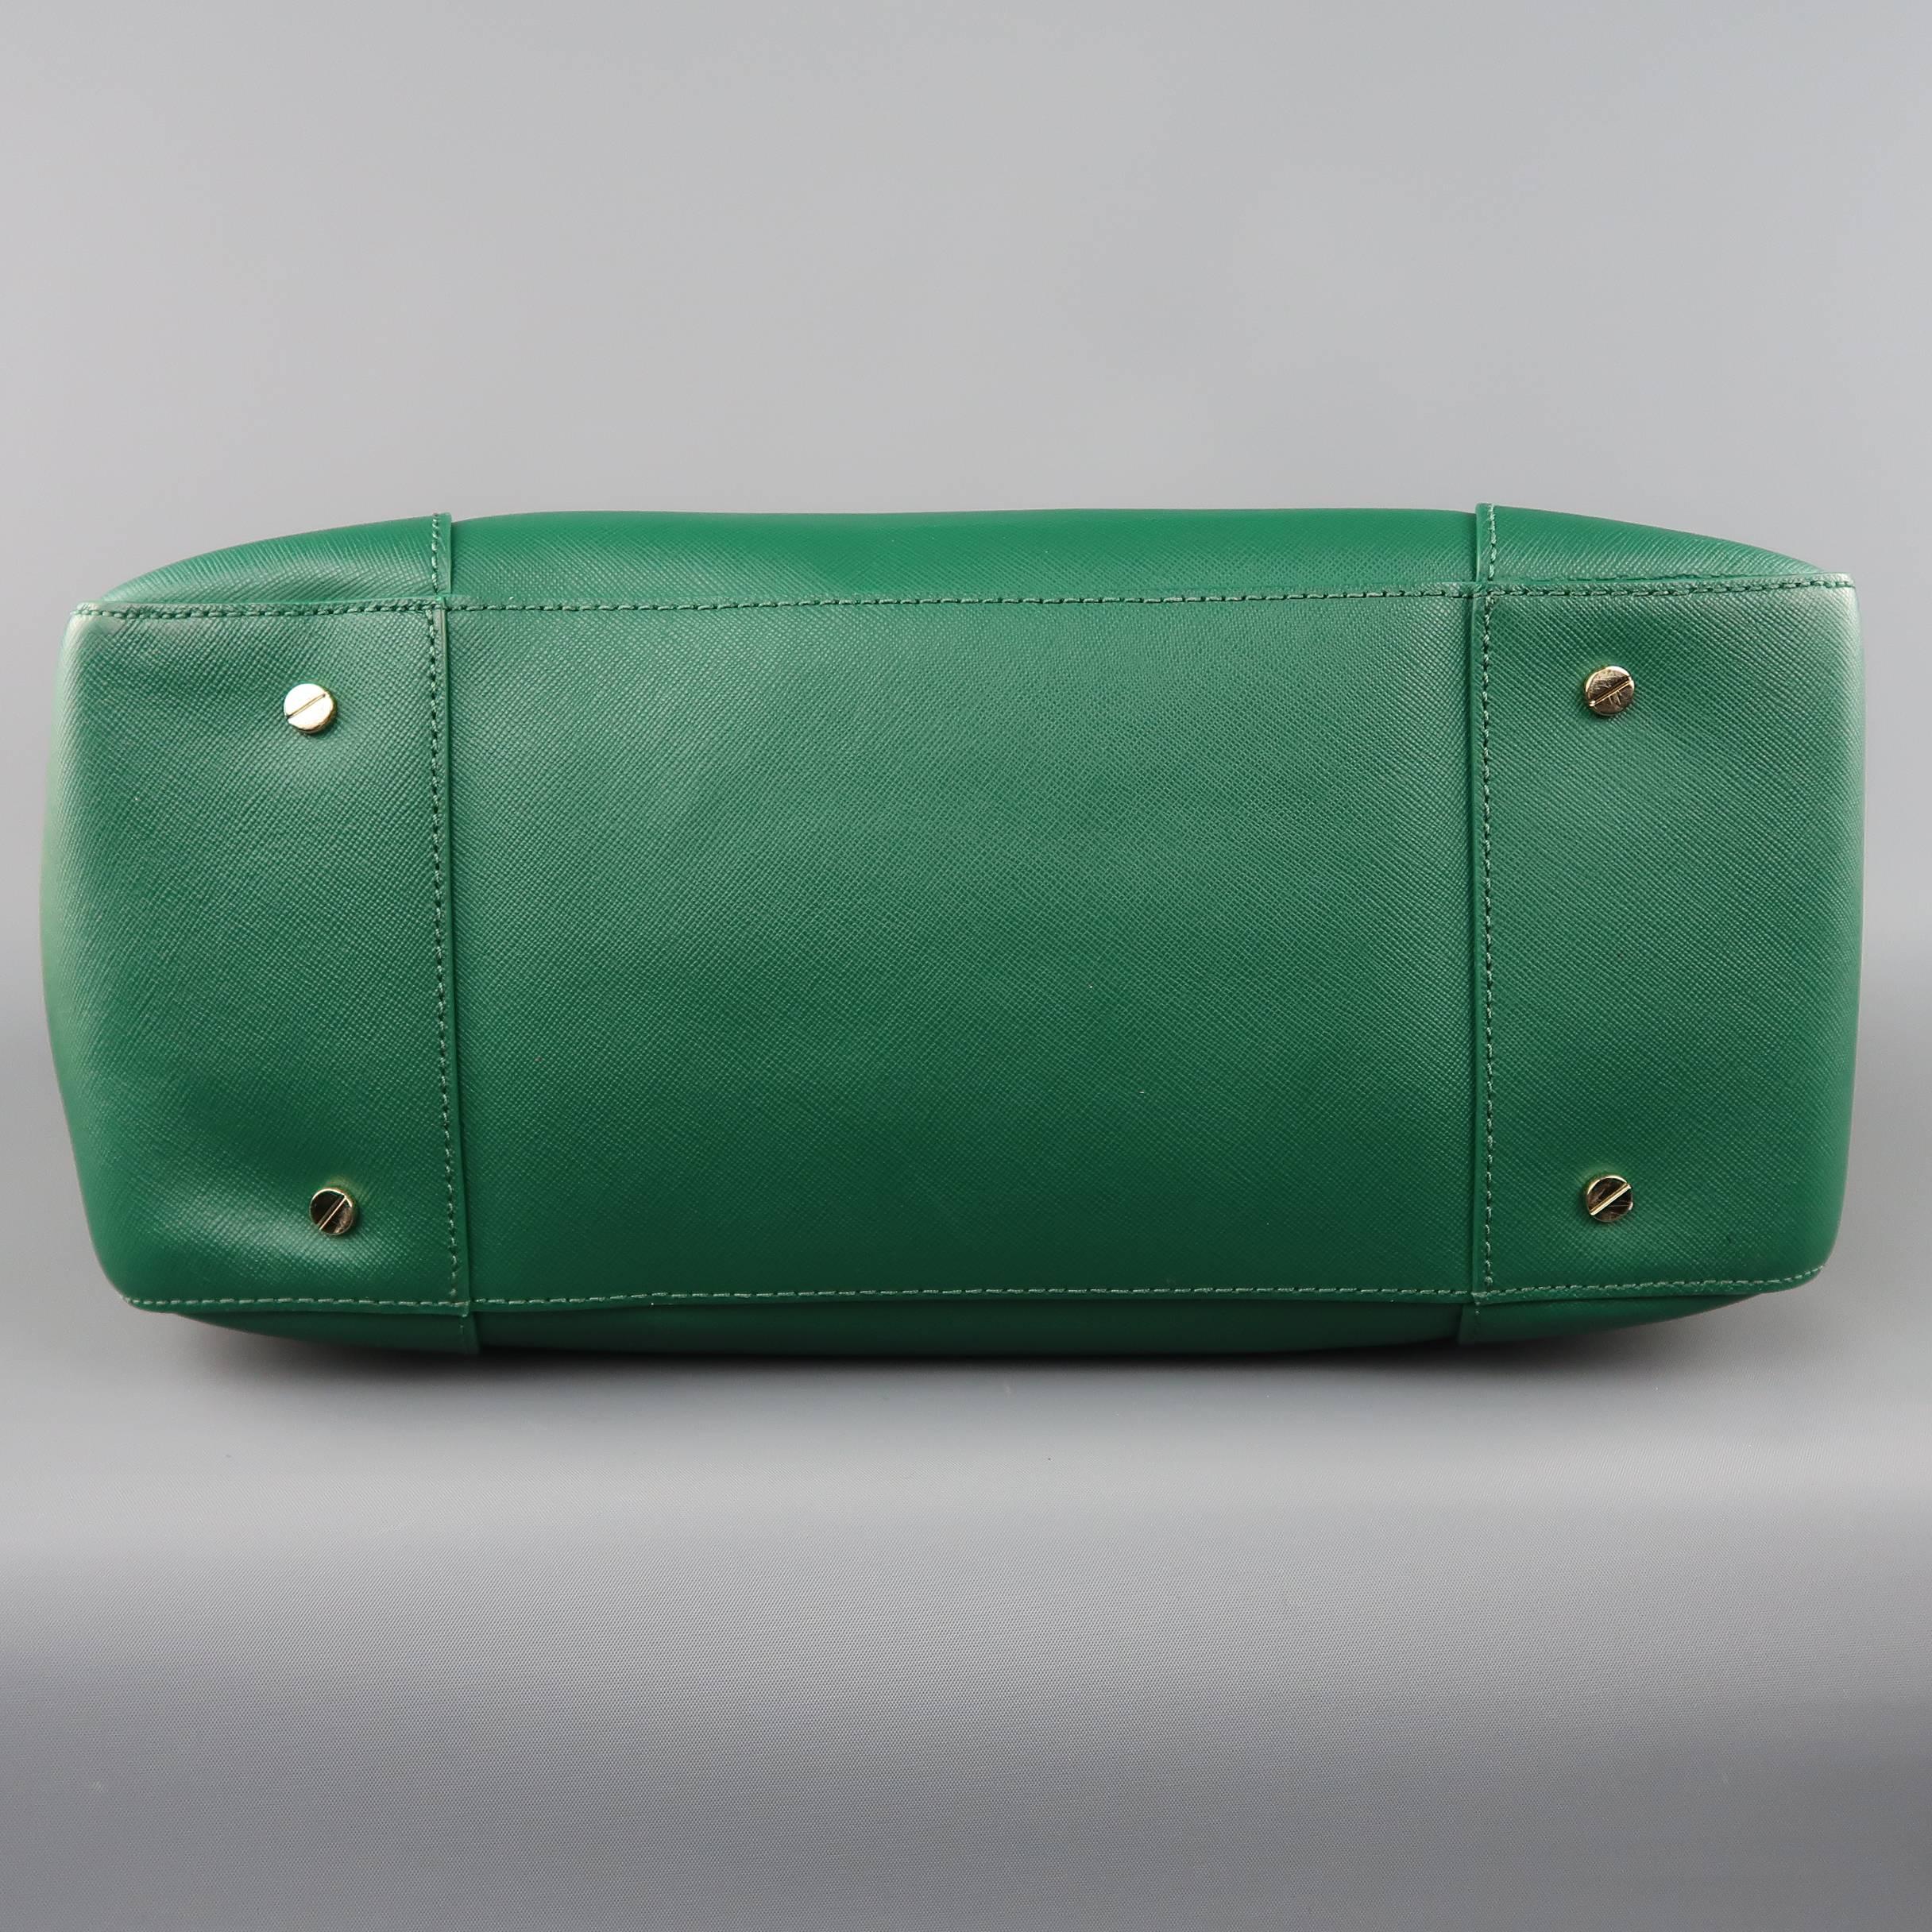 TORY BURCH Green Leather ROBINSON Tote Handbag 1